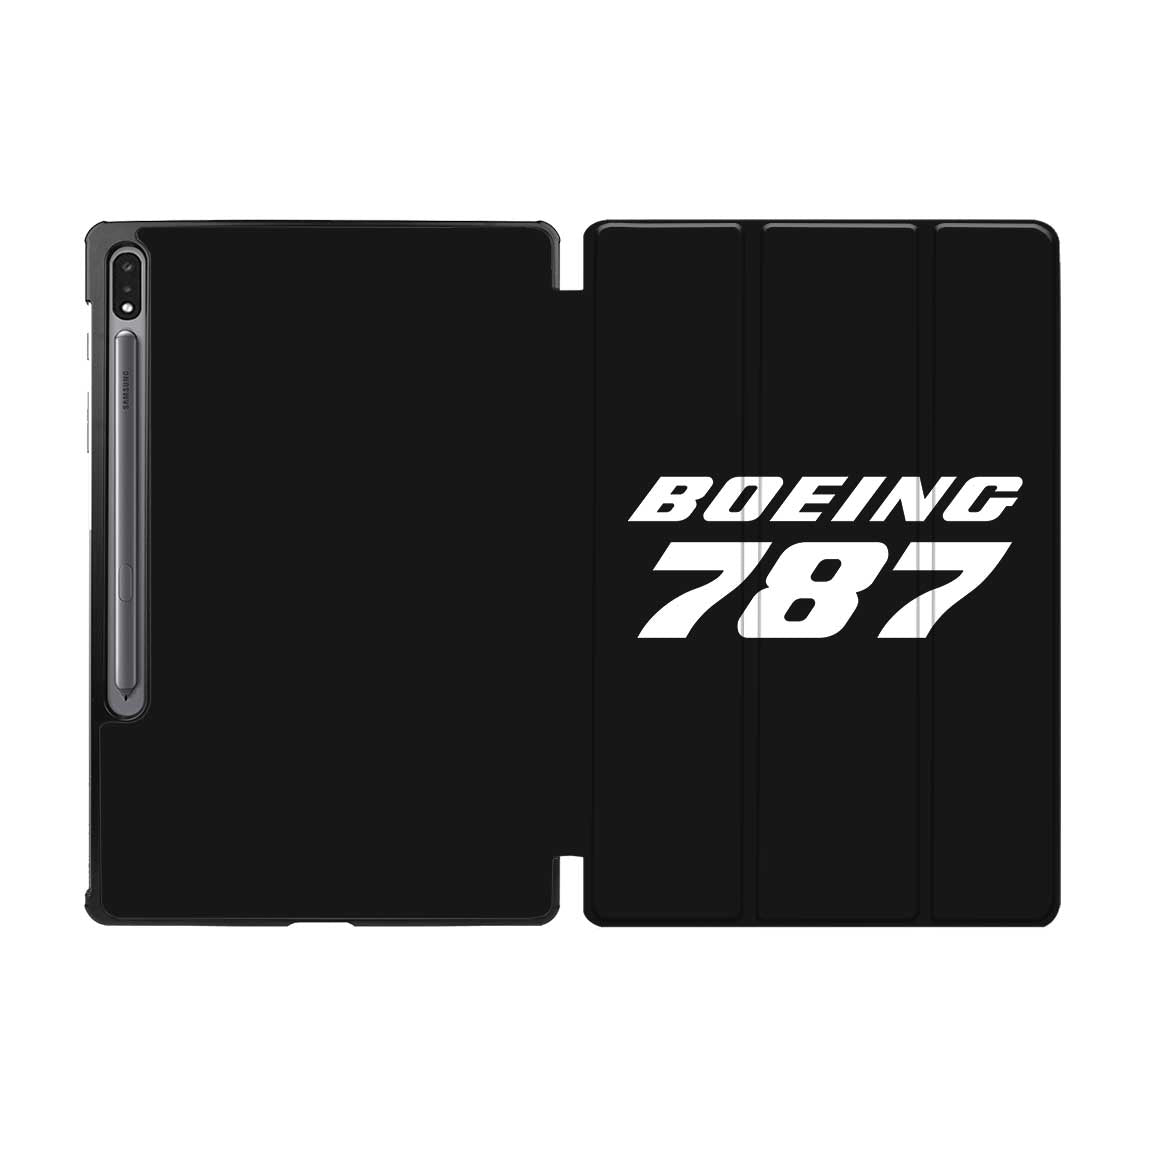 Boeing 787 & Text Designed Samsung Tablet Cases